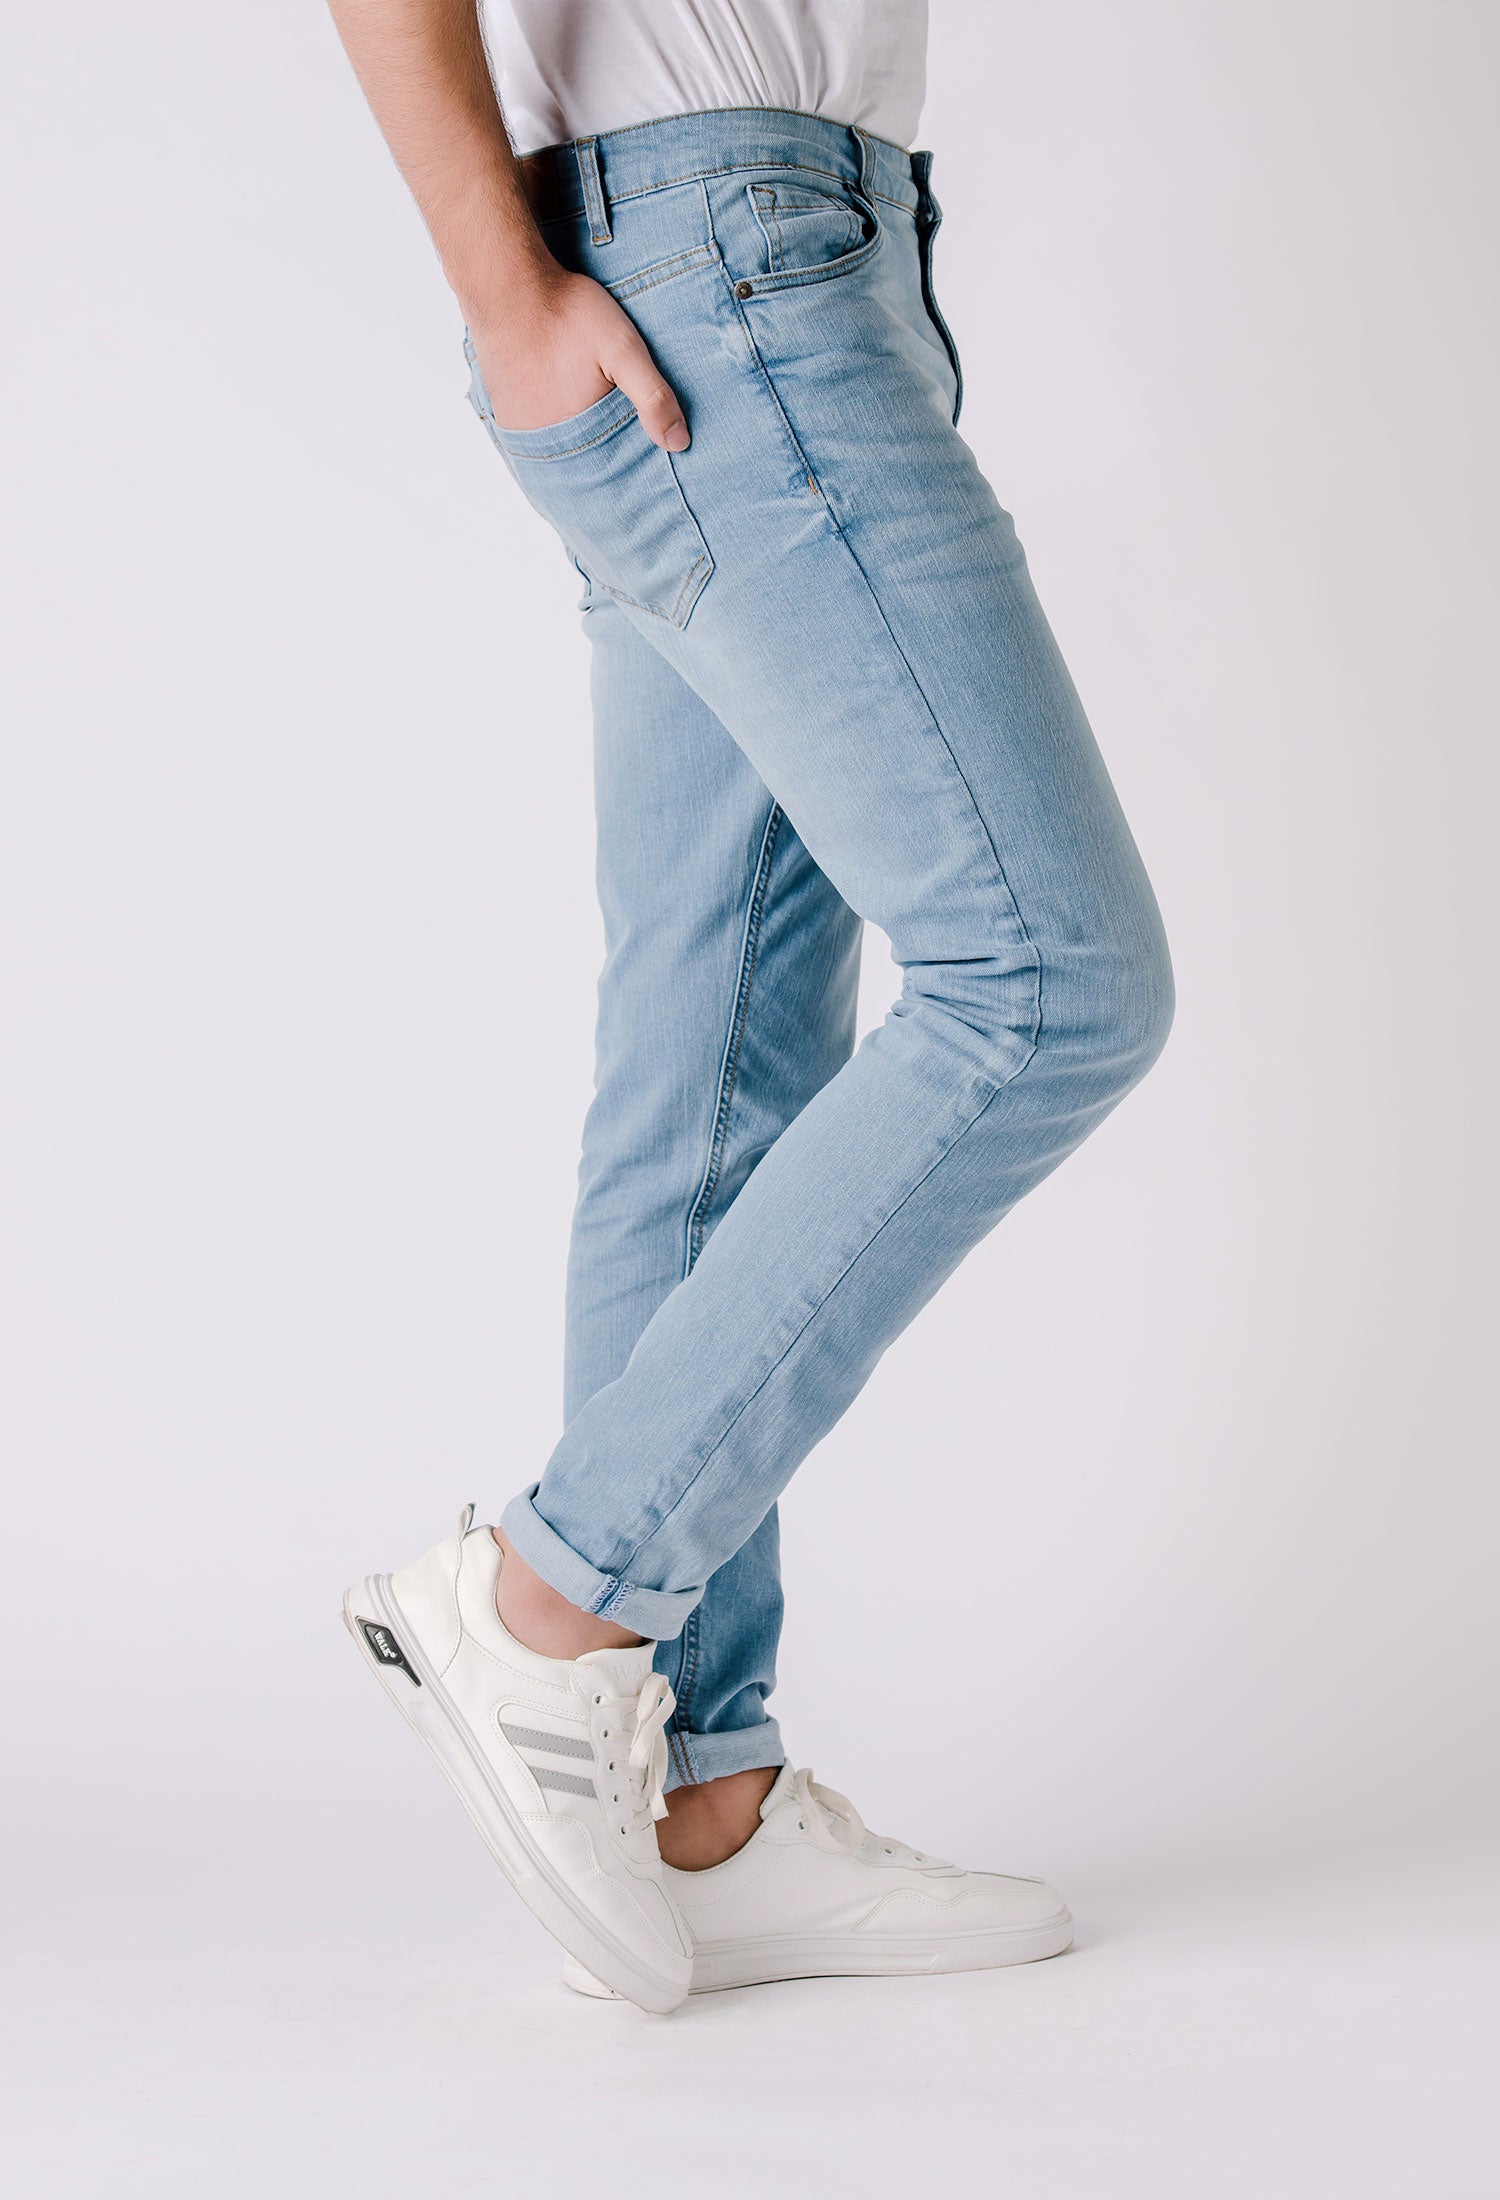 Ice Blue Denim Jeans (DNM-000001)